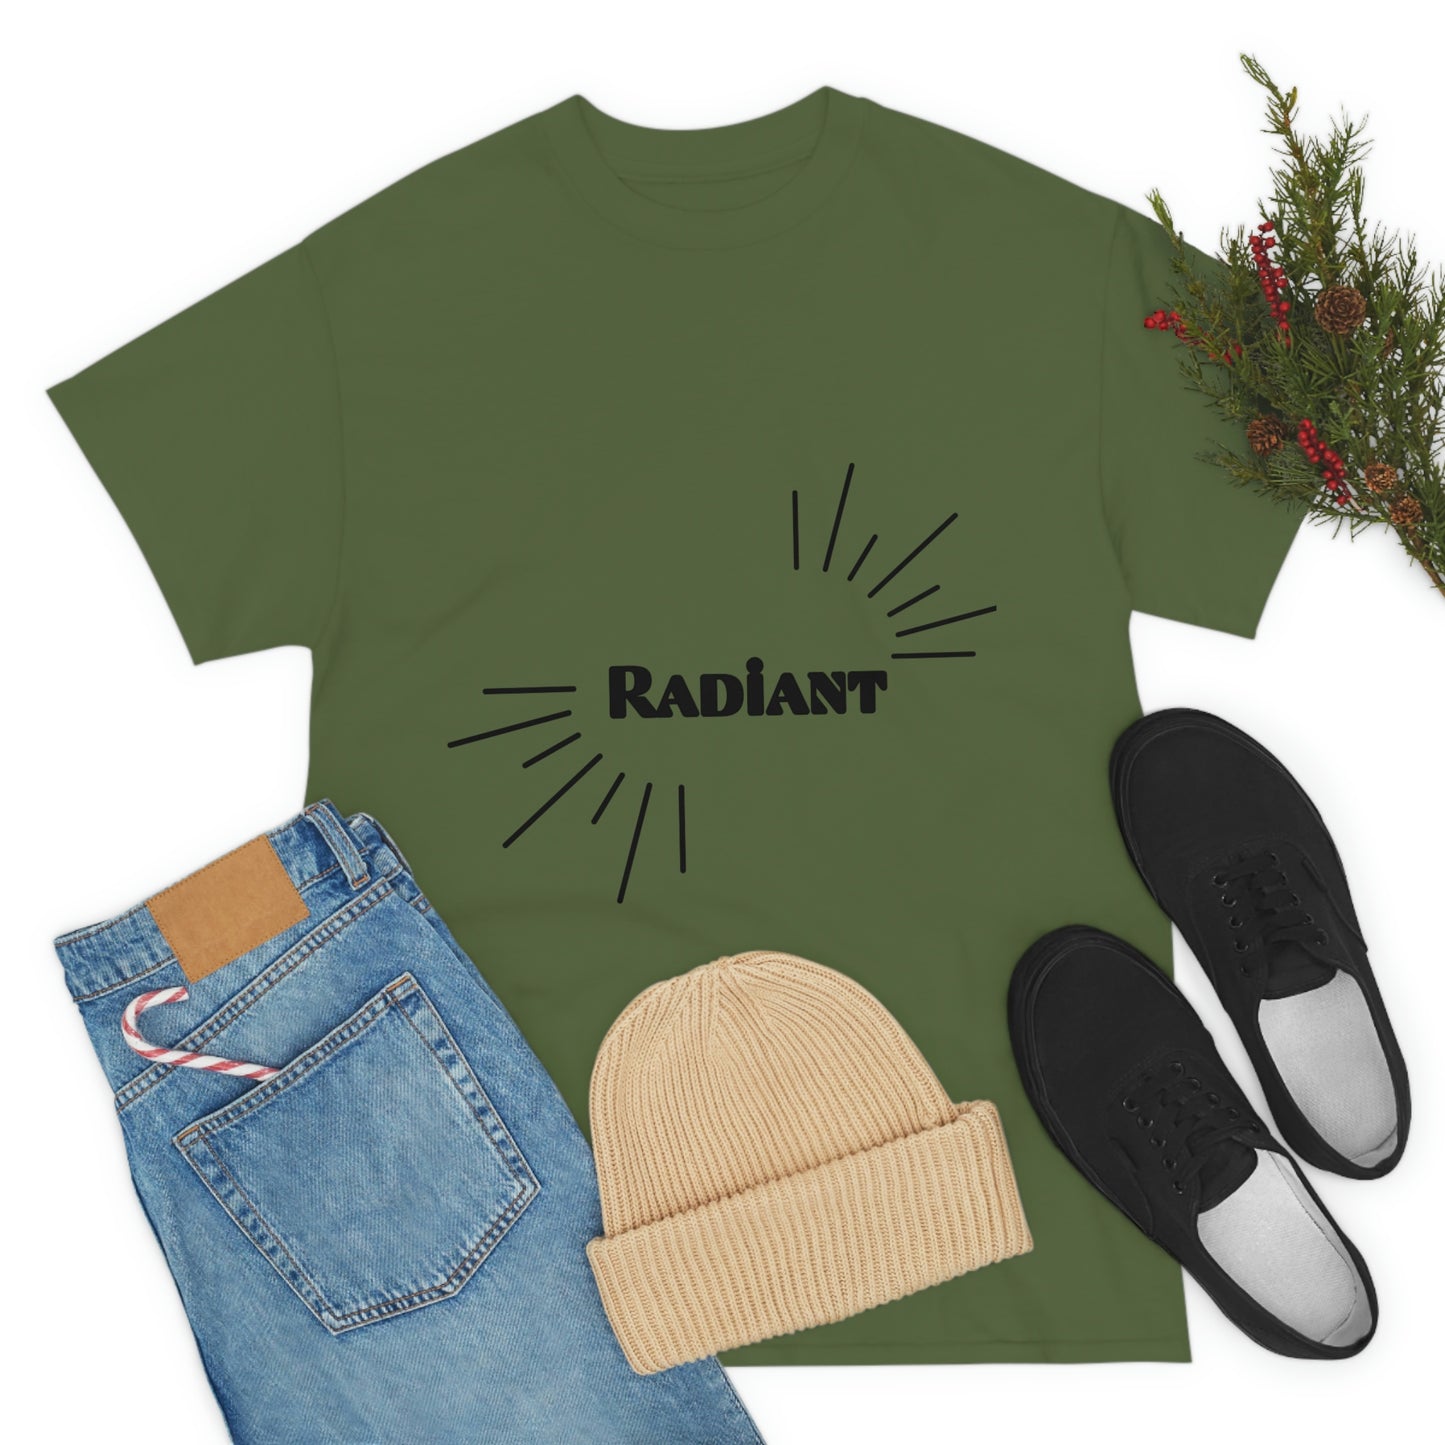 Radiant T-shirt